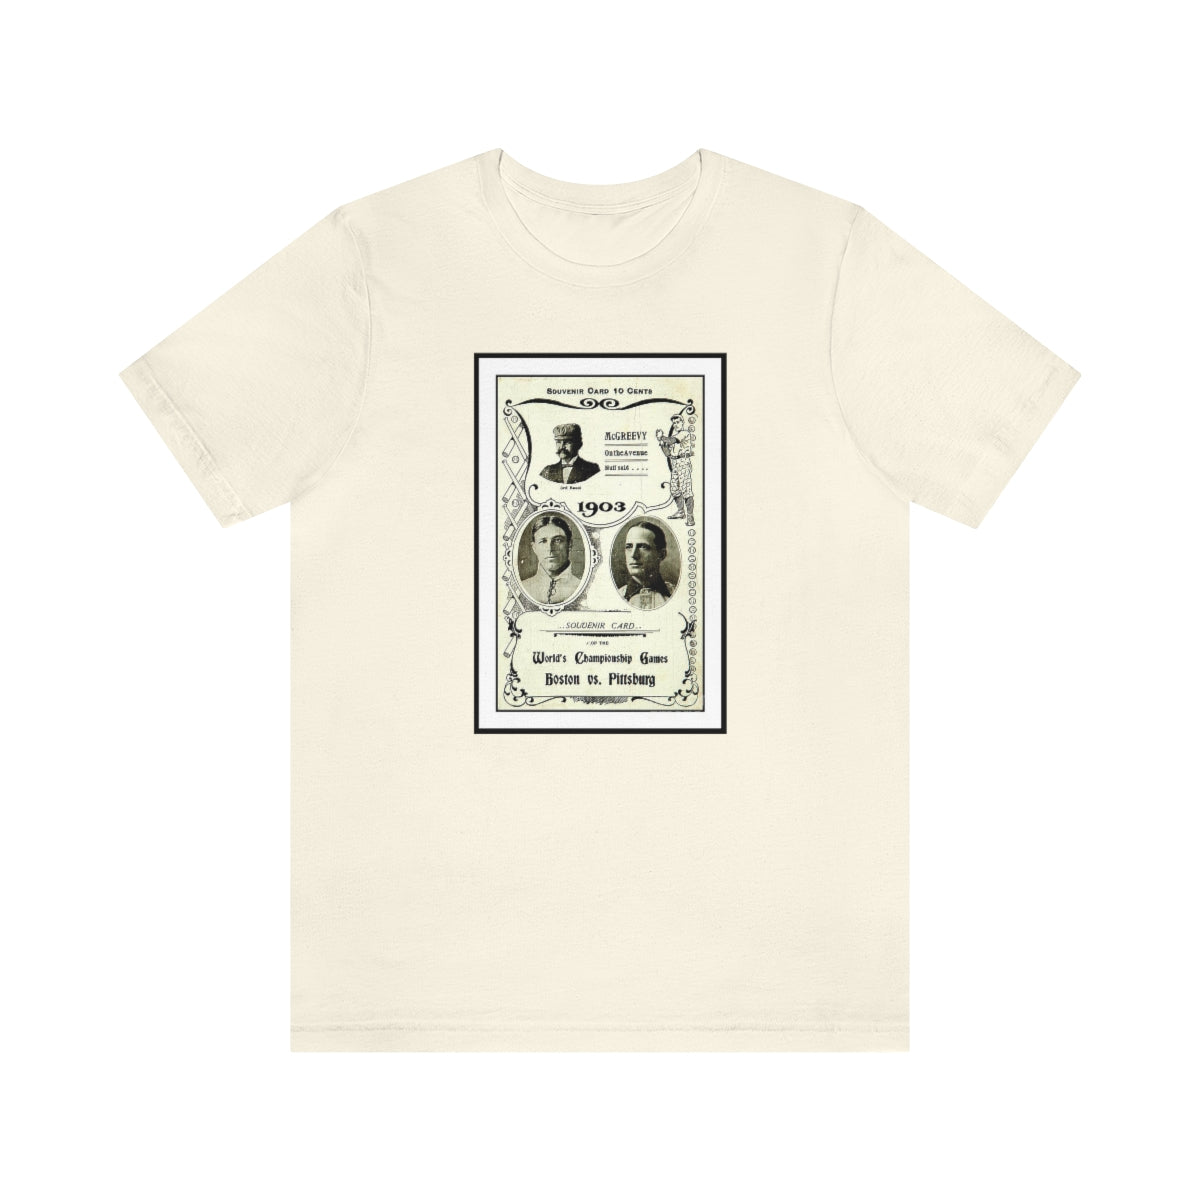 Printify Roberto Clemente Legend T-Shirt Short Sleeve Tee